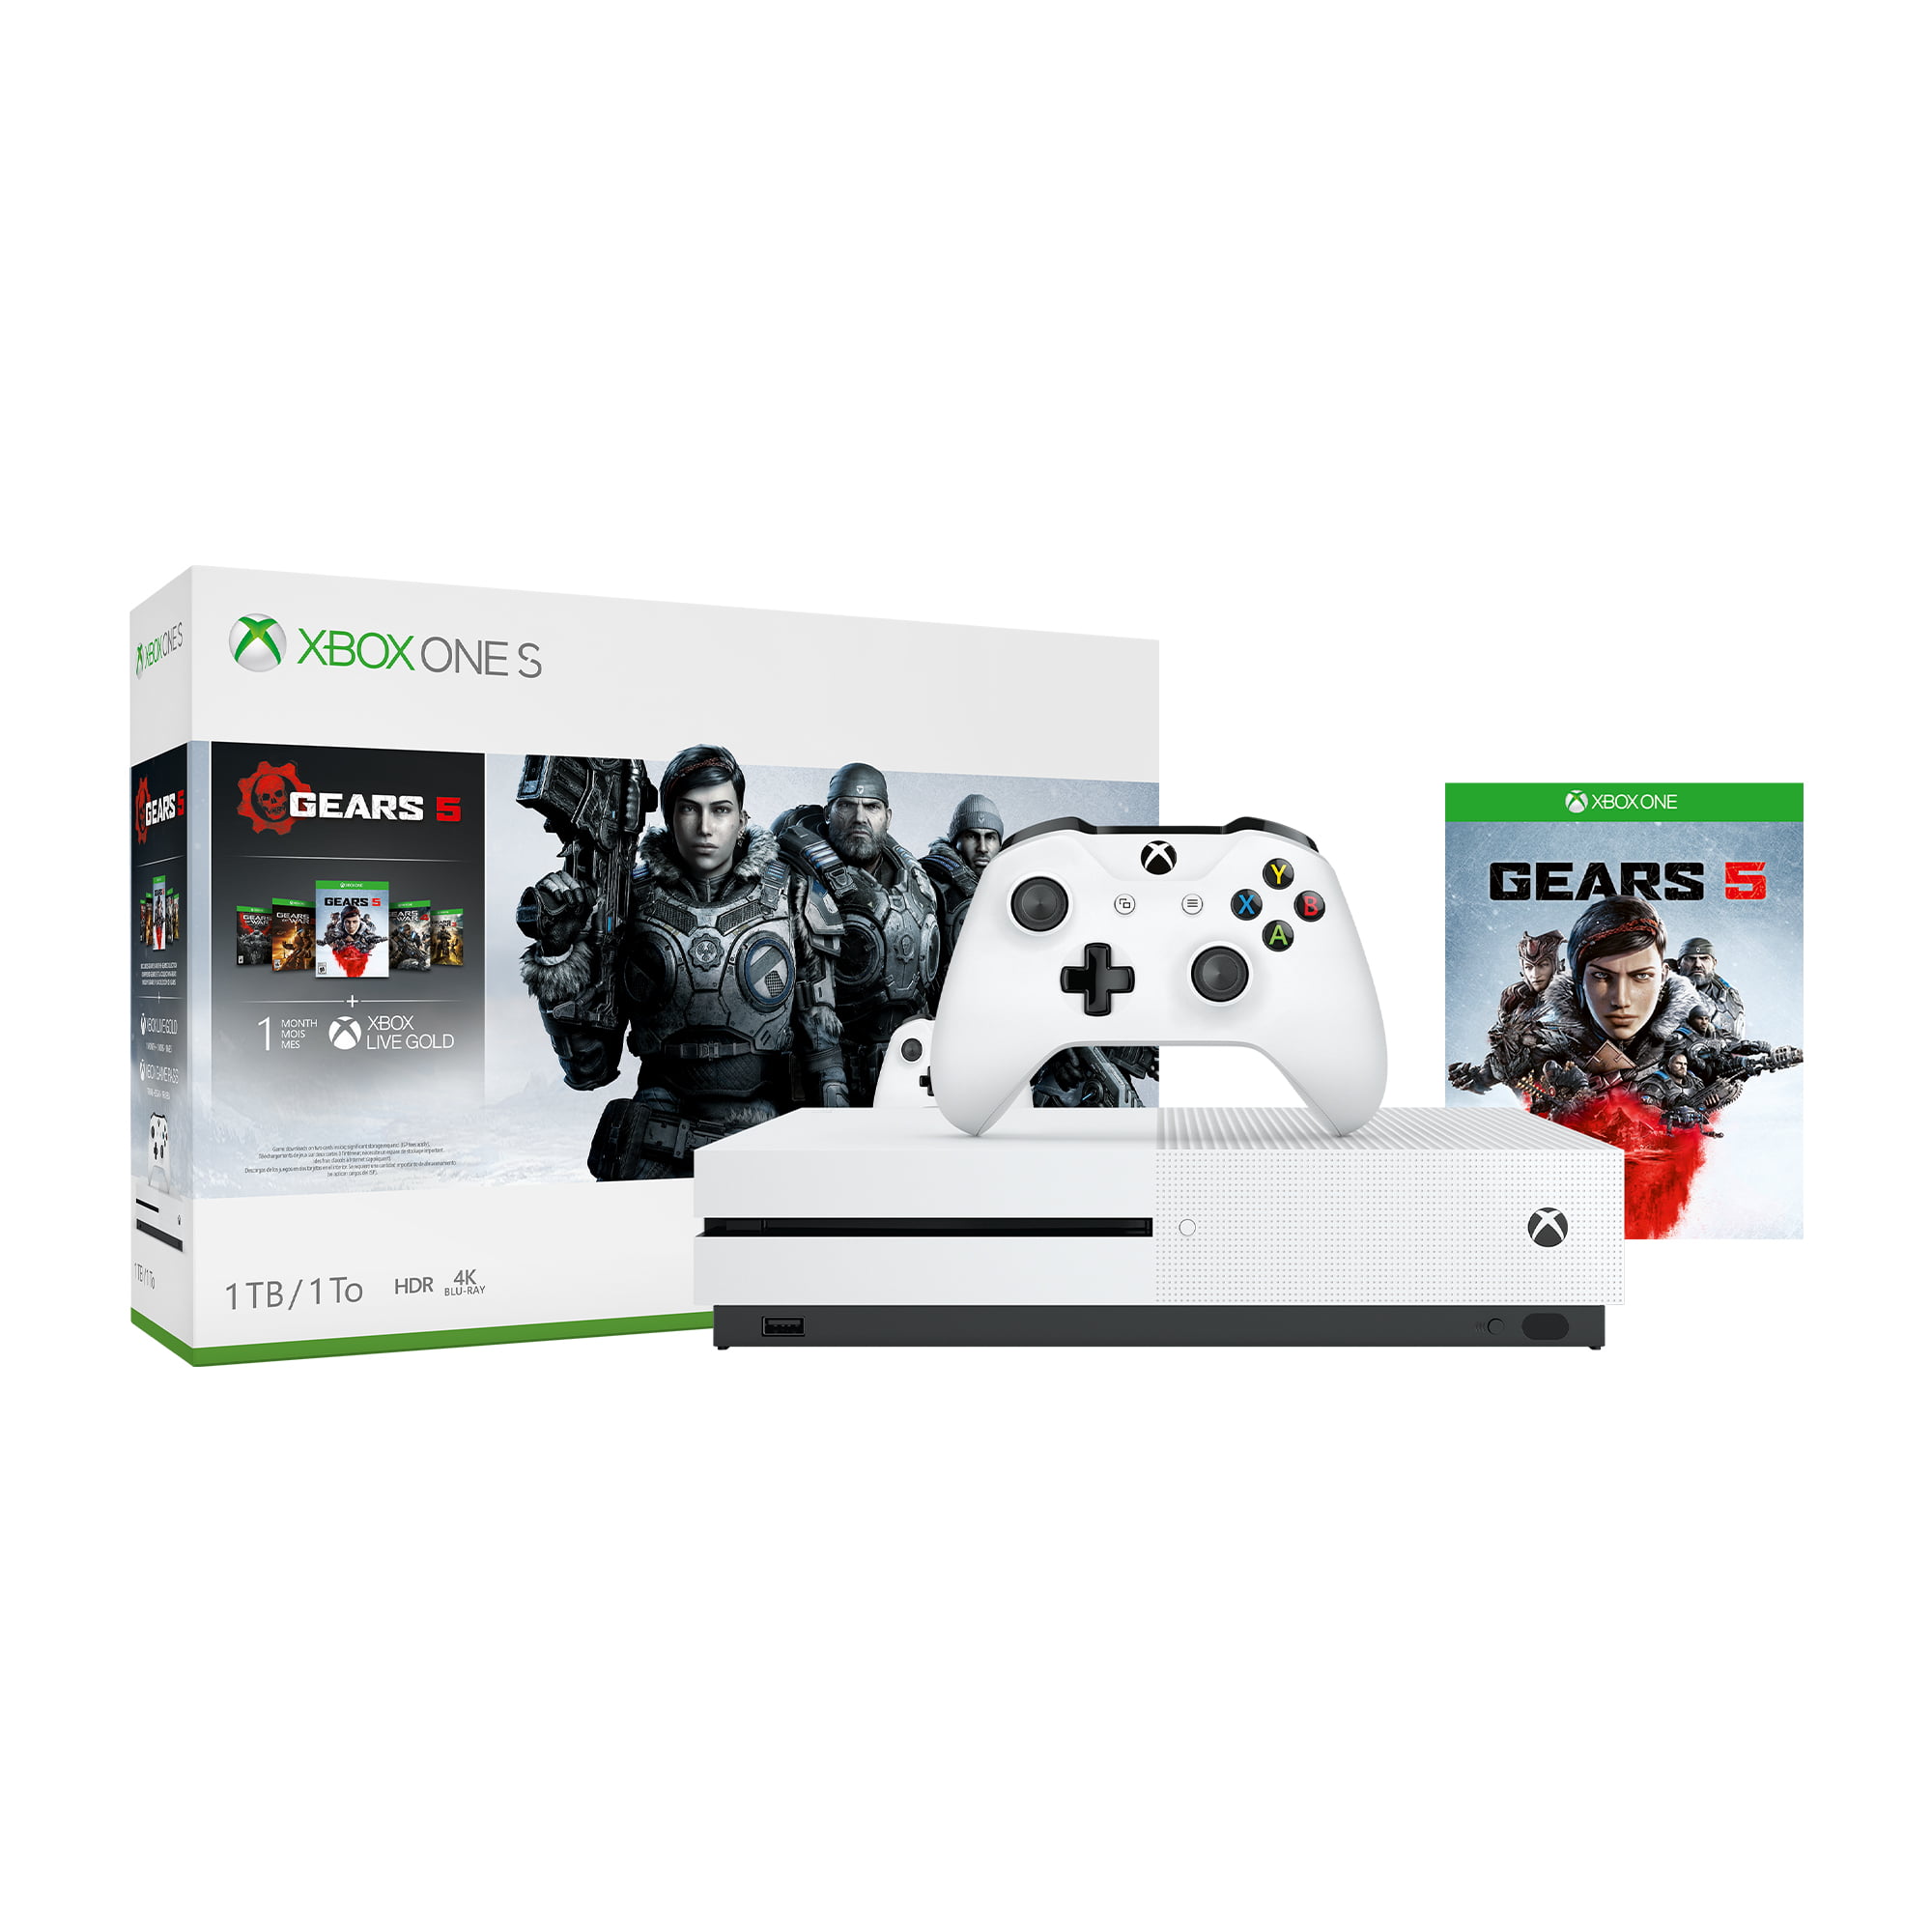 Indomable Productividad Mezquita Microsoft Xbox One S 1TB Gears 5 Bundle, White, 234-01020 - Walmart.com